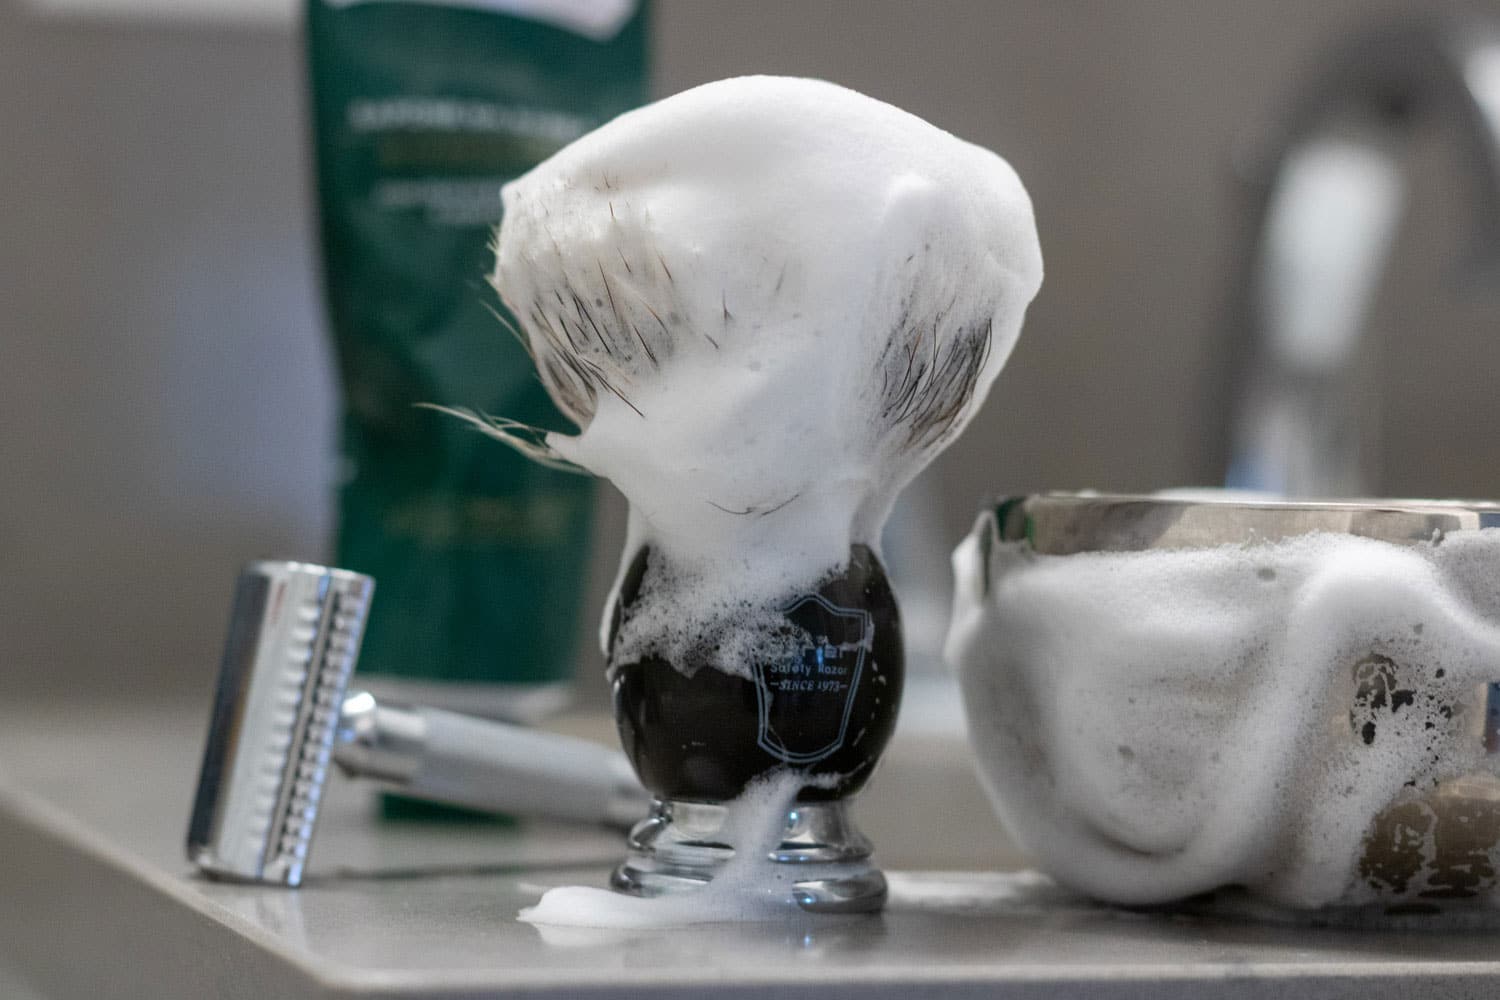 shaving brush with shaving bowl and razor on bathroom countertop